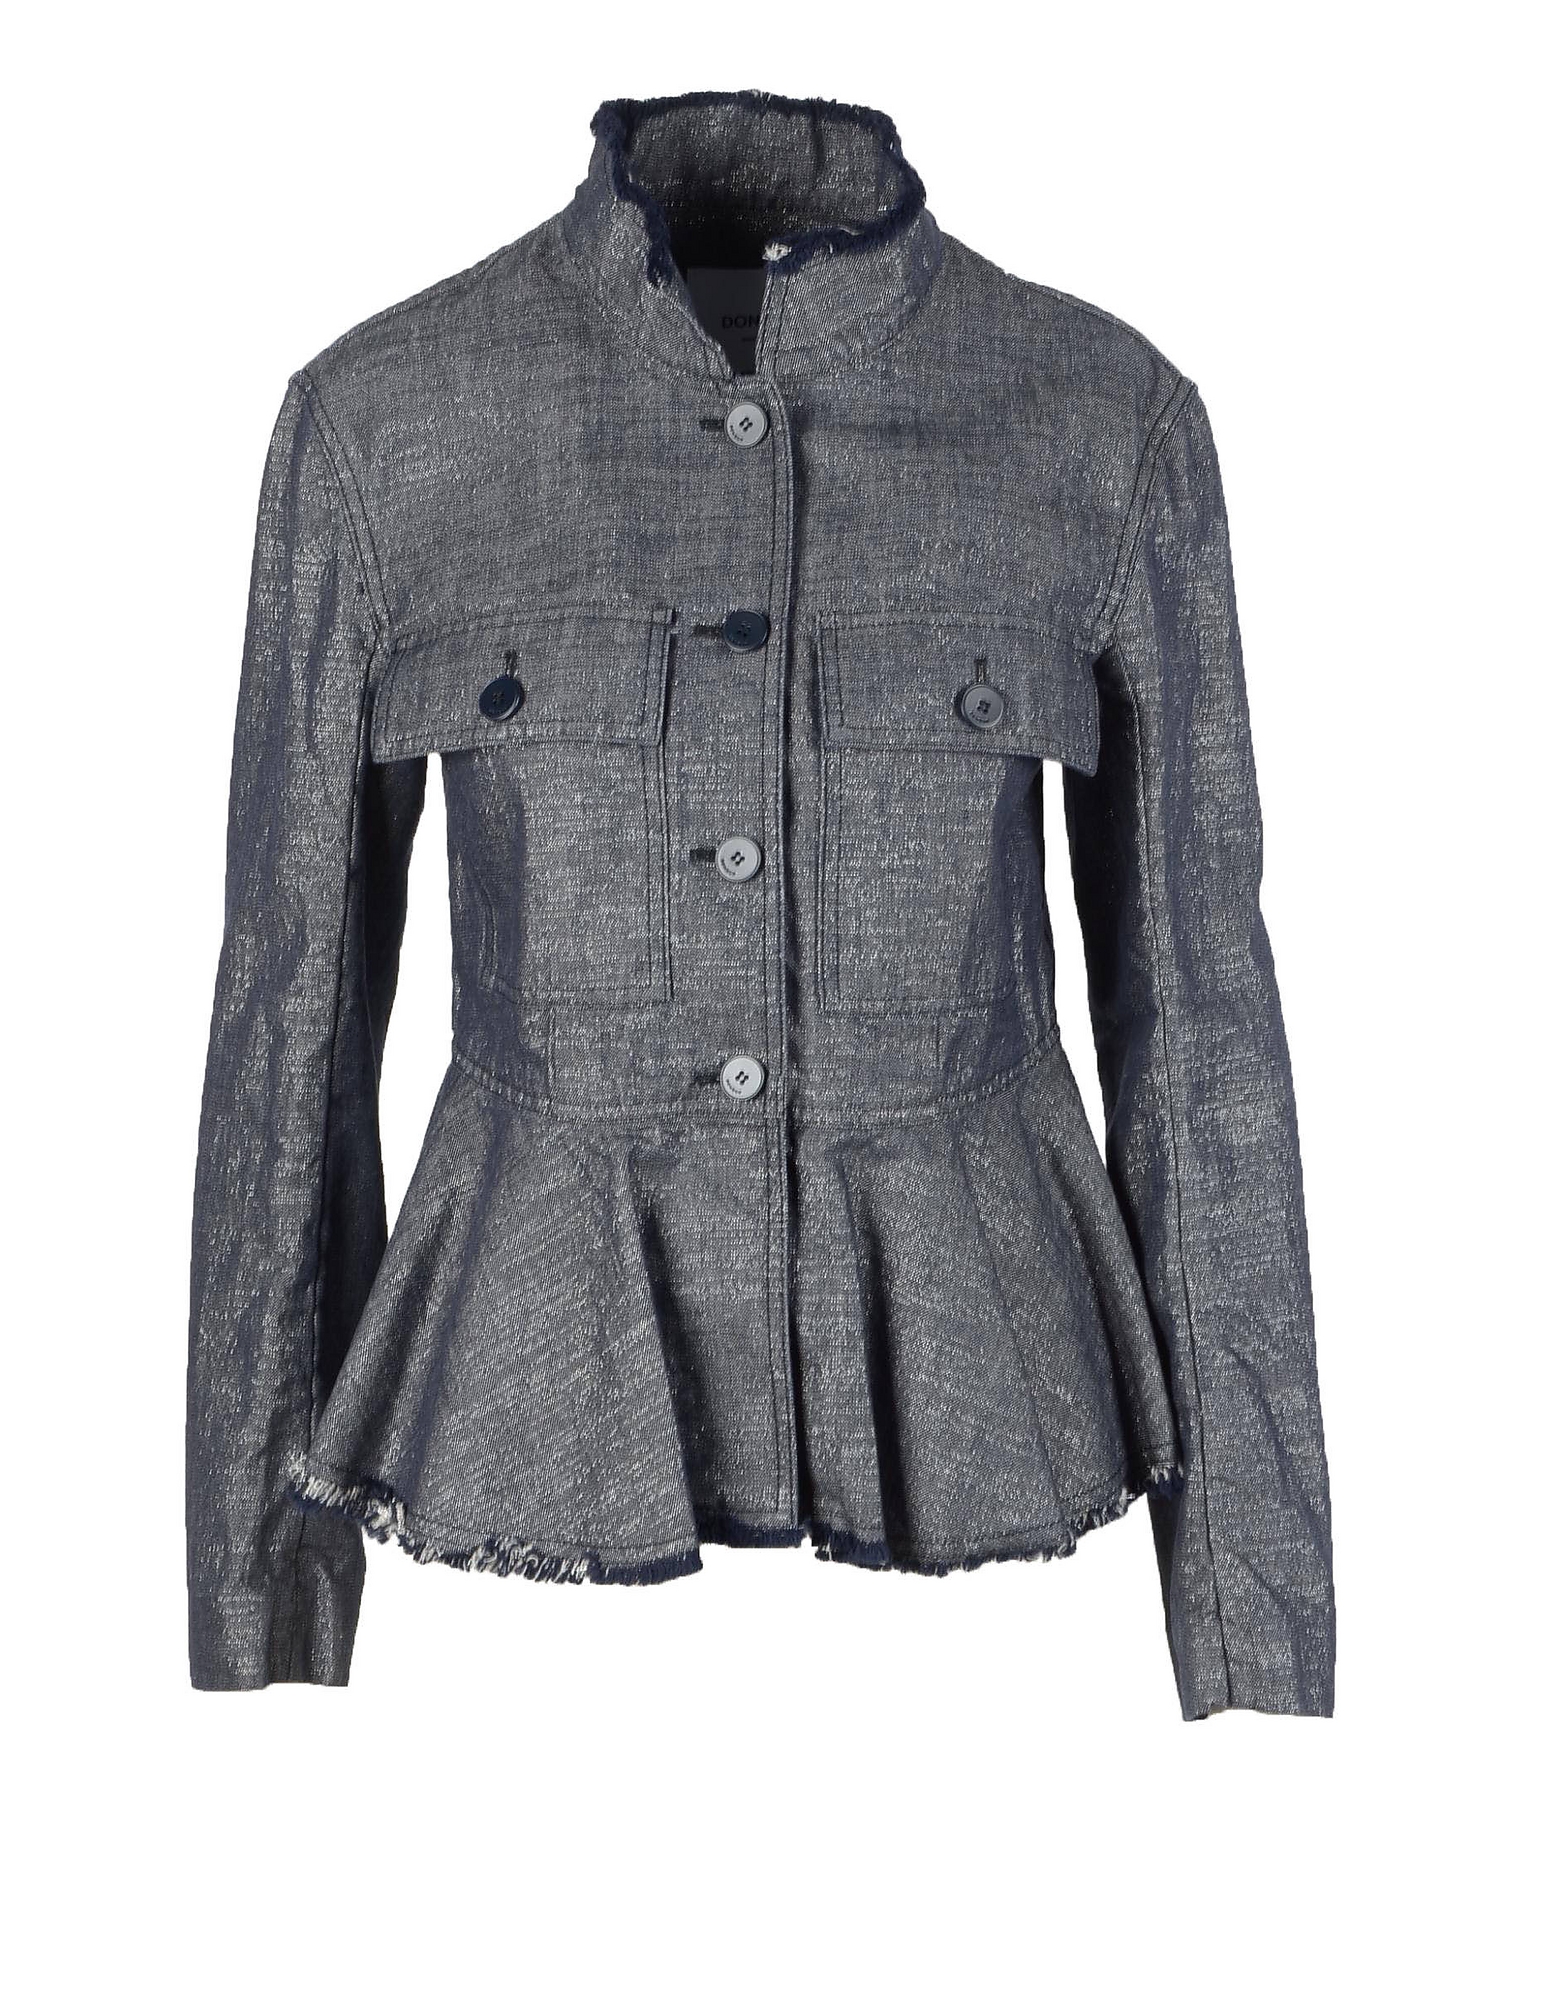 Dondup  Coats & Jackets Women's Navy Blue Blazer